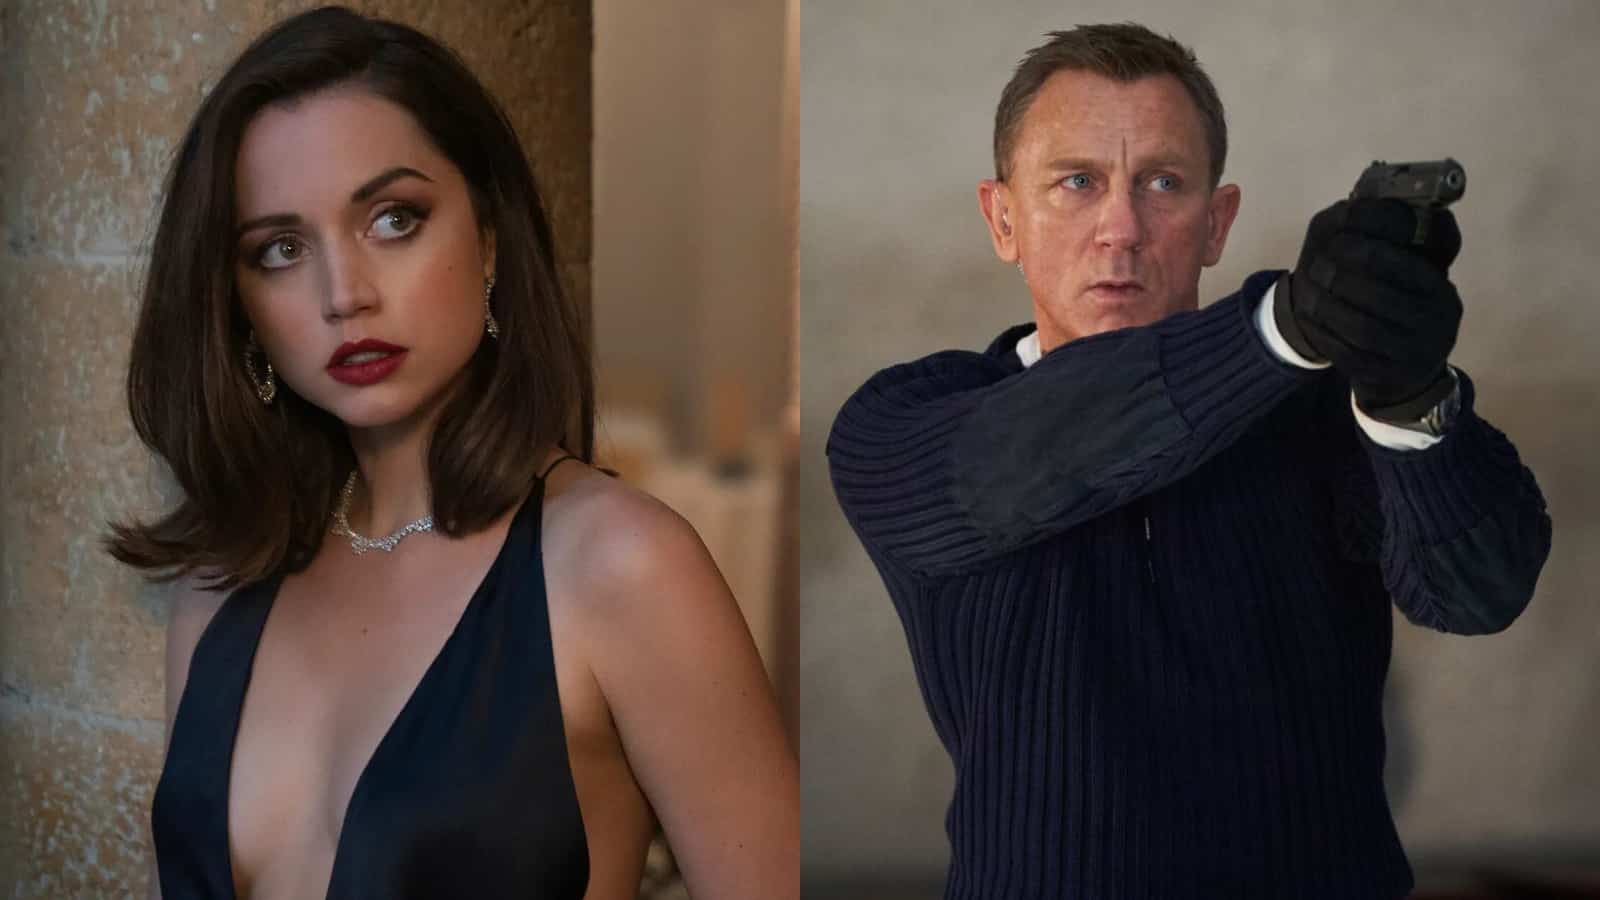 Ana de Armas in No Time to Die alongside Daniel Craig, with De Armas not believing in a female James Bond.